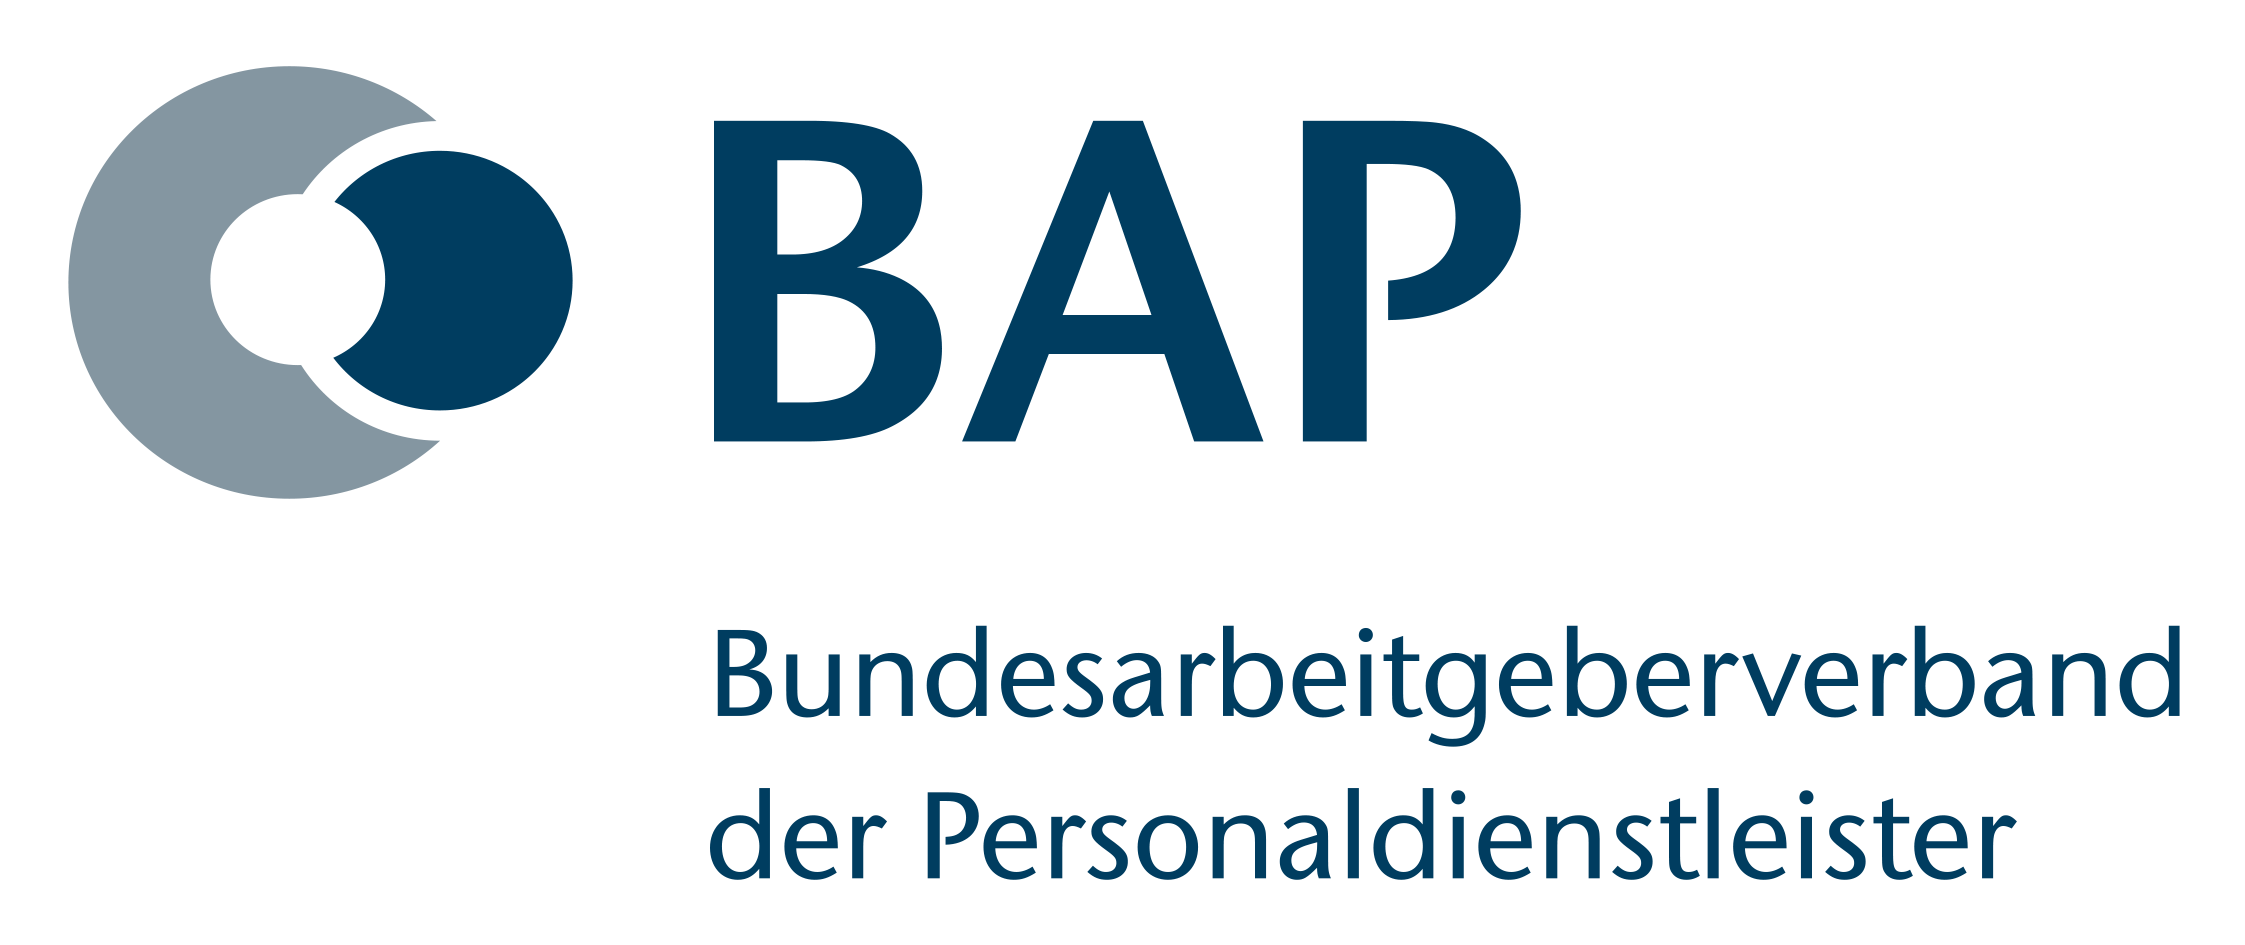 Logo BAP-Bundesarbeitgeberverband-Personaldienstleister